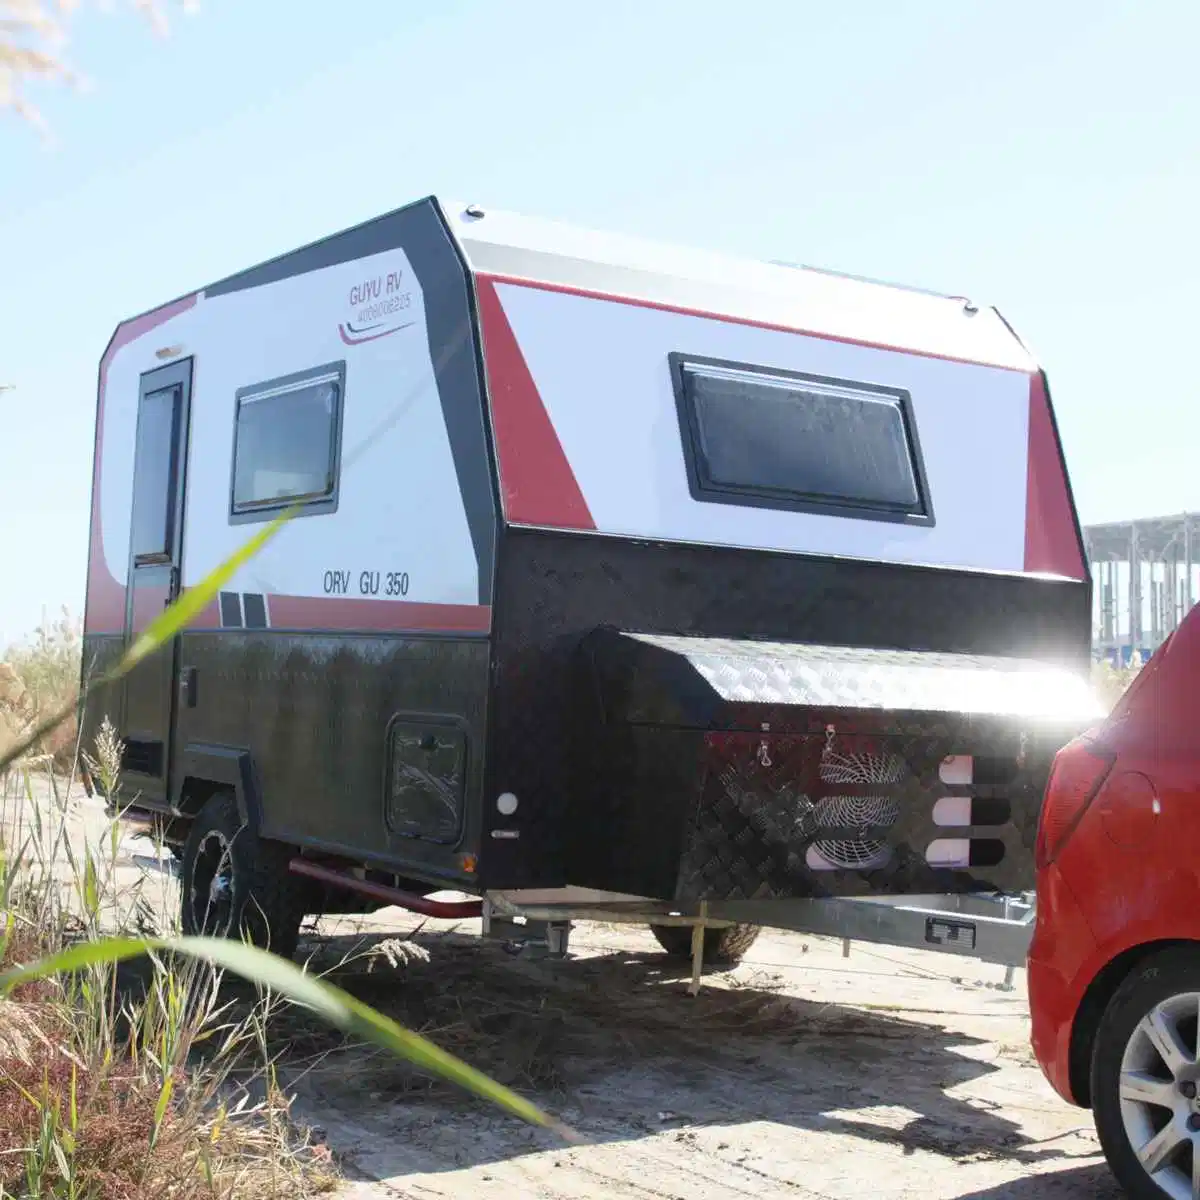 Customized Family Camper RV off Road Mobile Caravan Camper Trailer for Sale